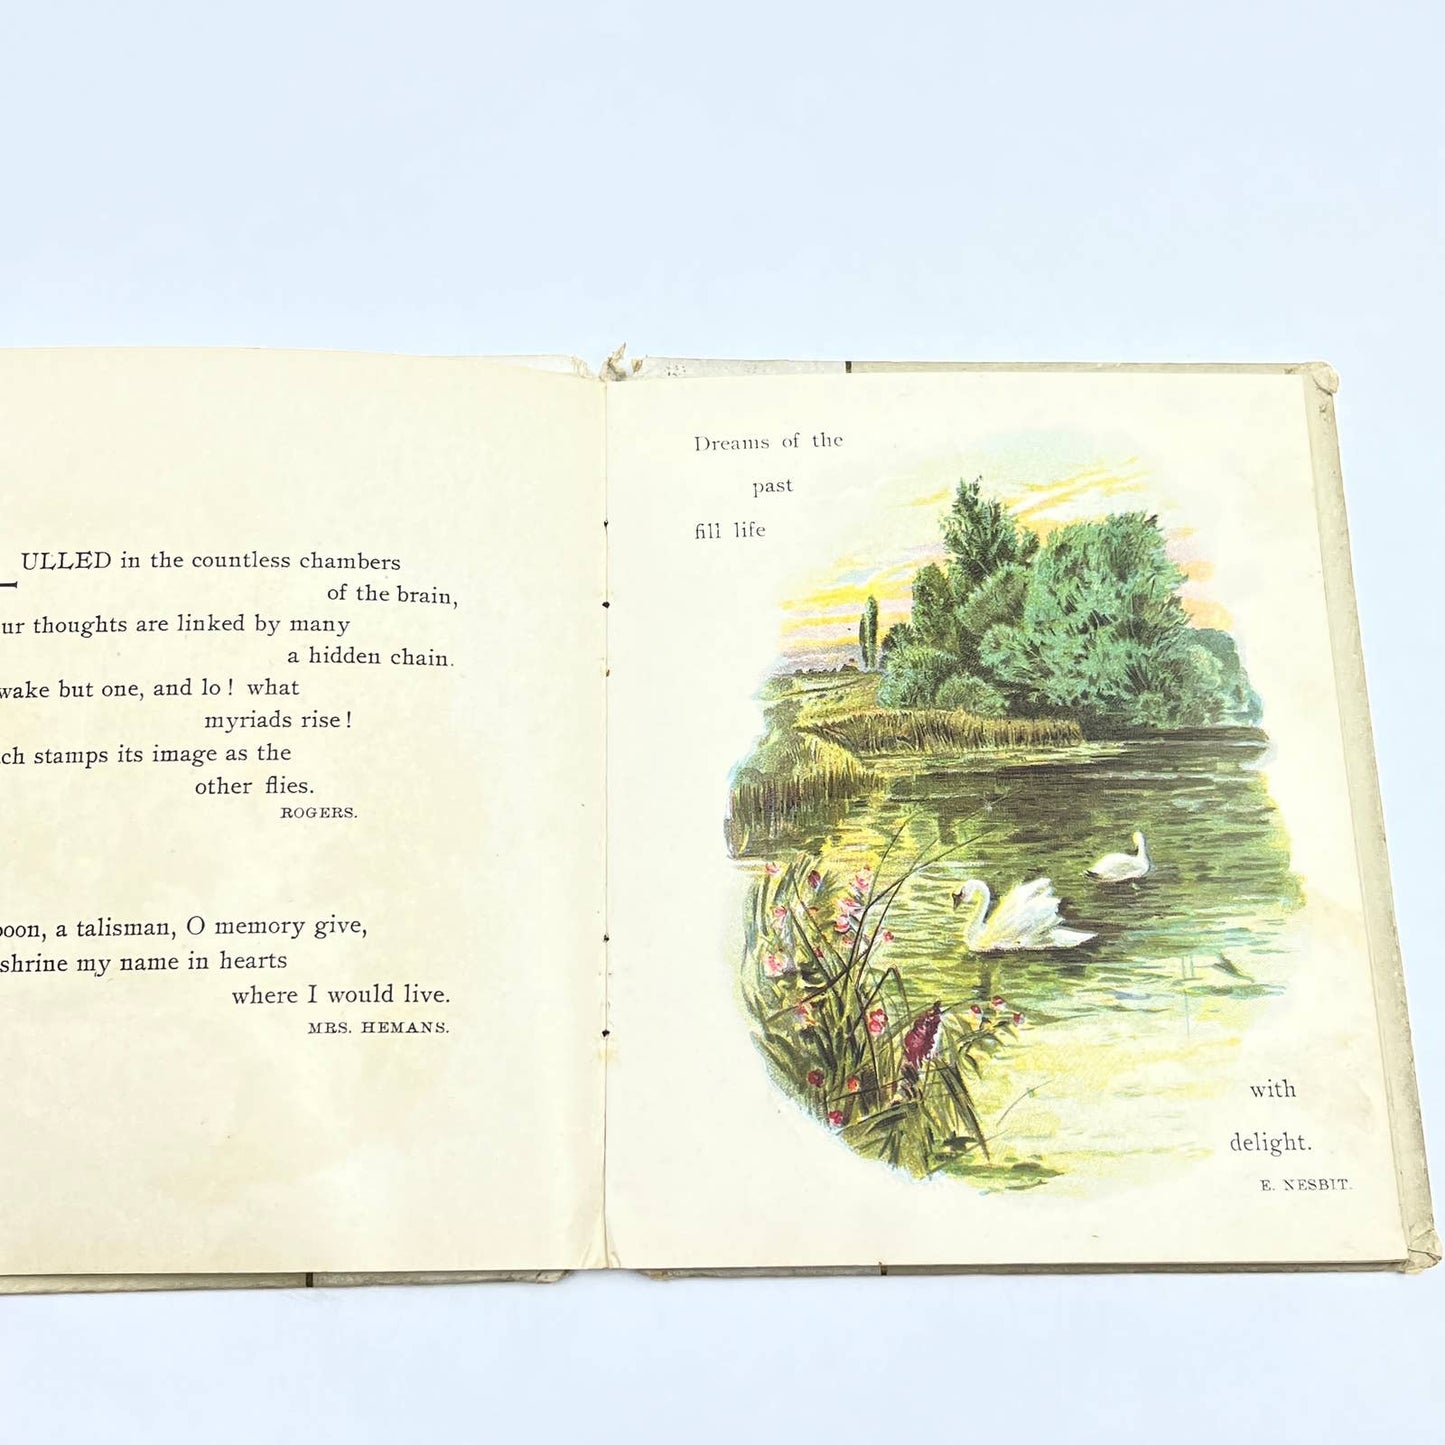 c1900 Links of Memory Victorian Poem Flower Book HC TG2